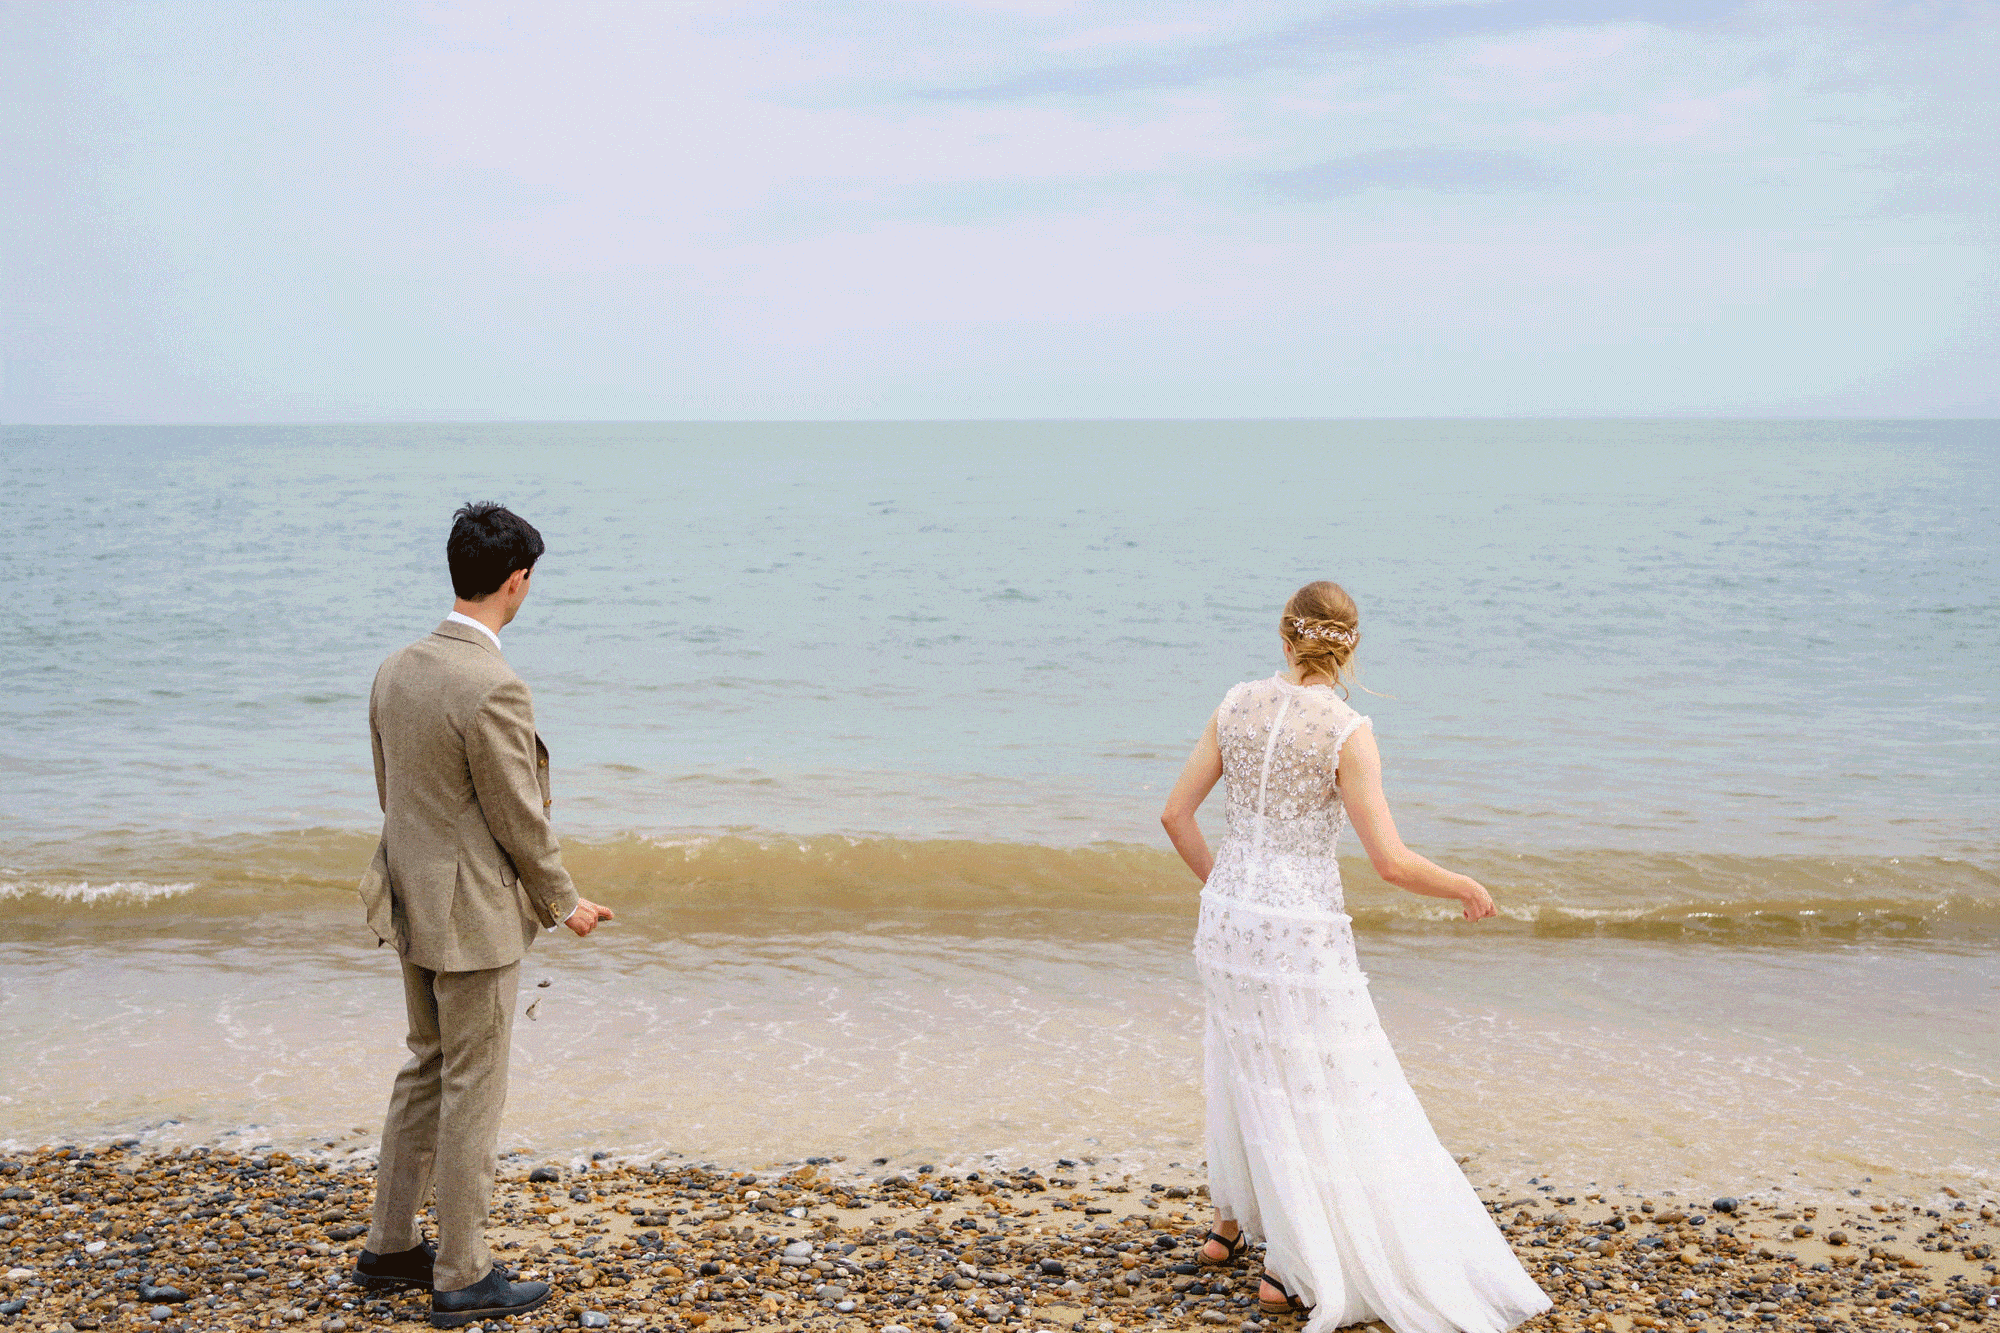 Wedding couple skimming stones on a beach